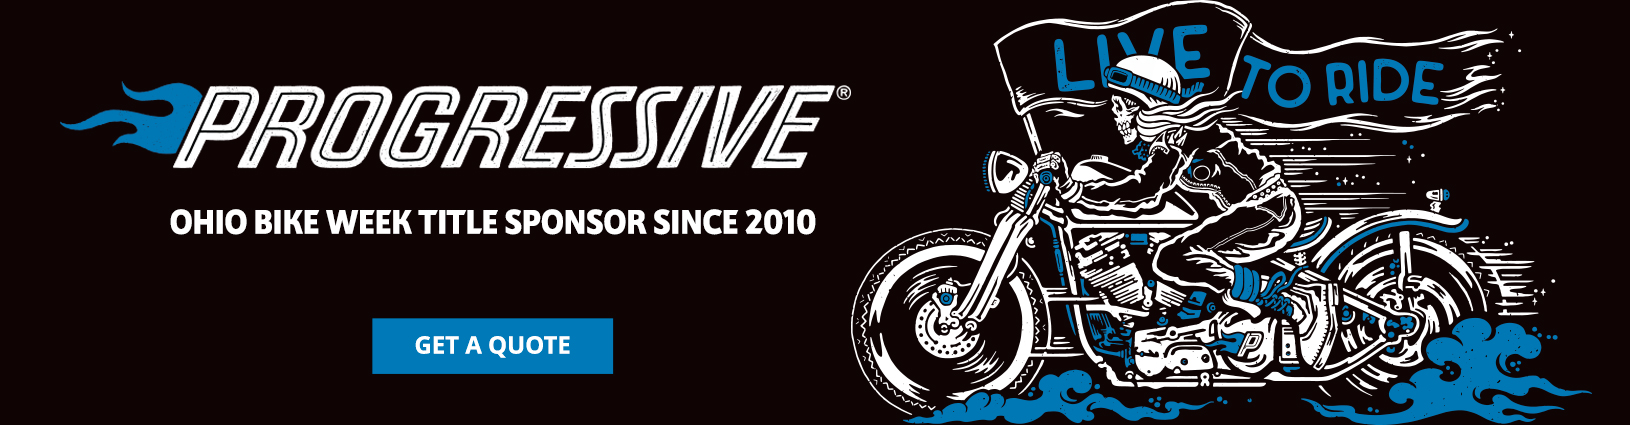 Progressive Ohio Bike Week Title Sponsor